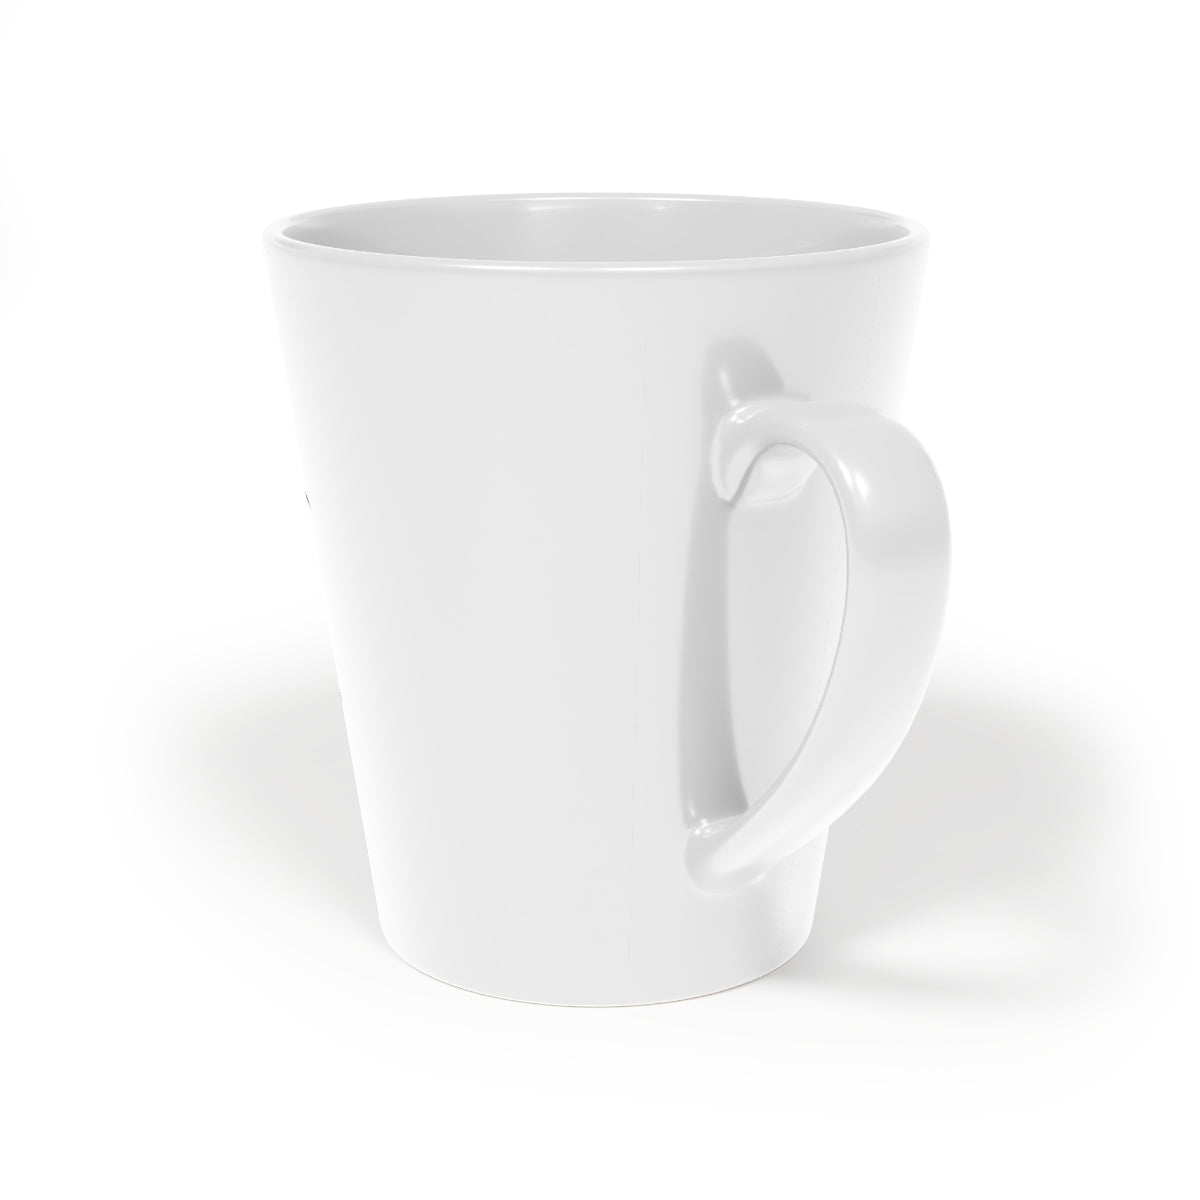 Violetann Tarot Logo - Latte Mug, 12oz